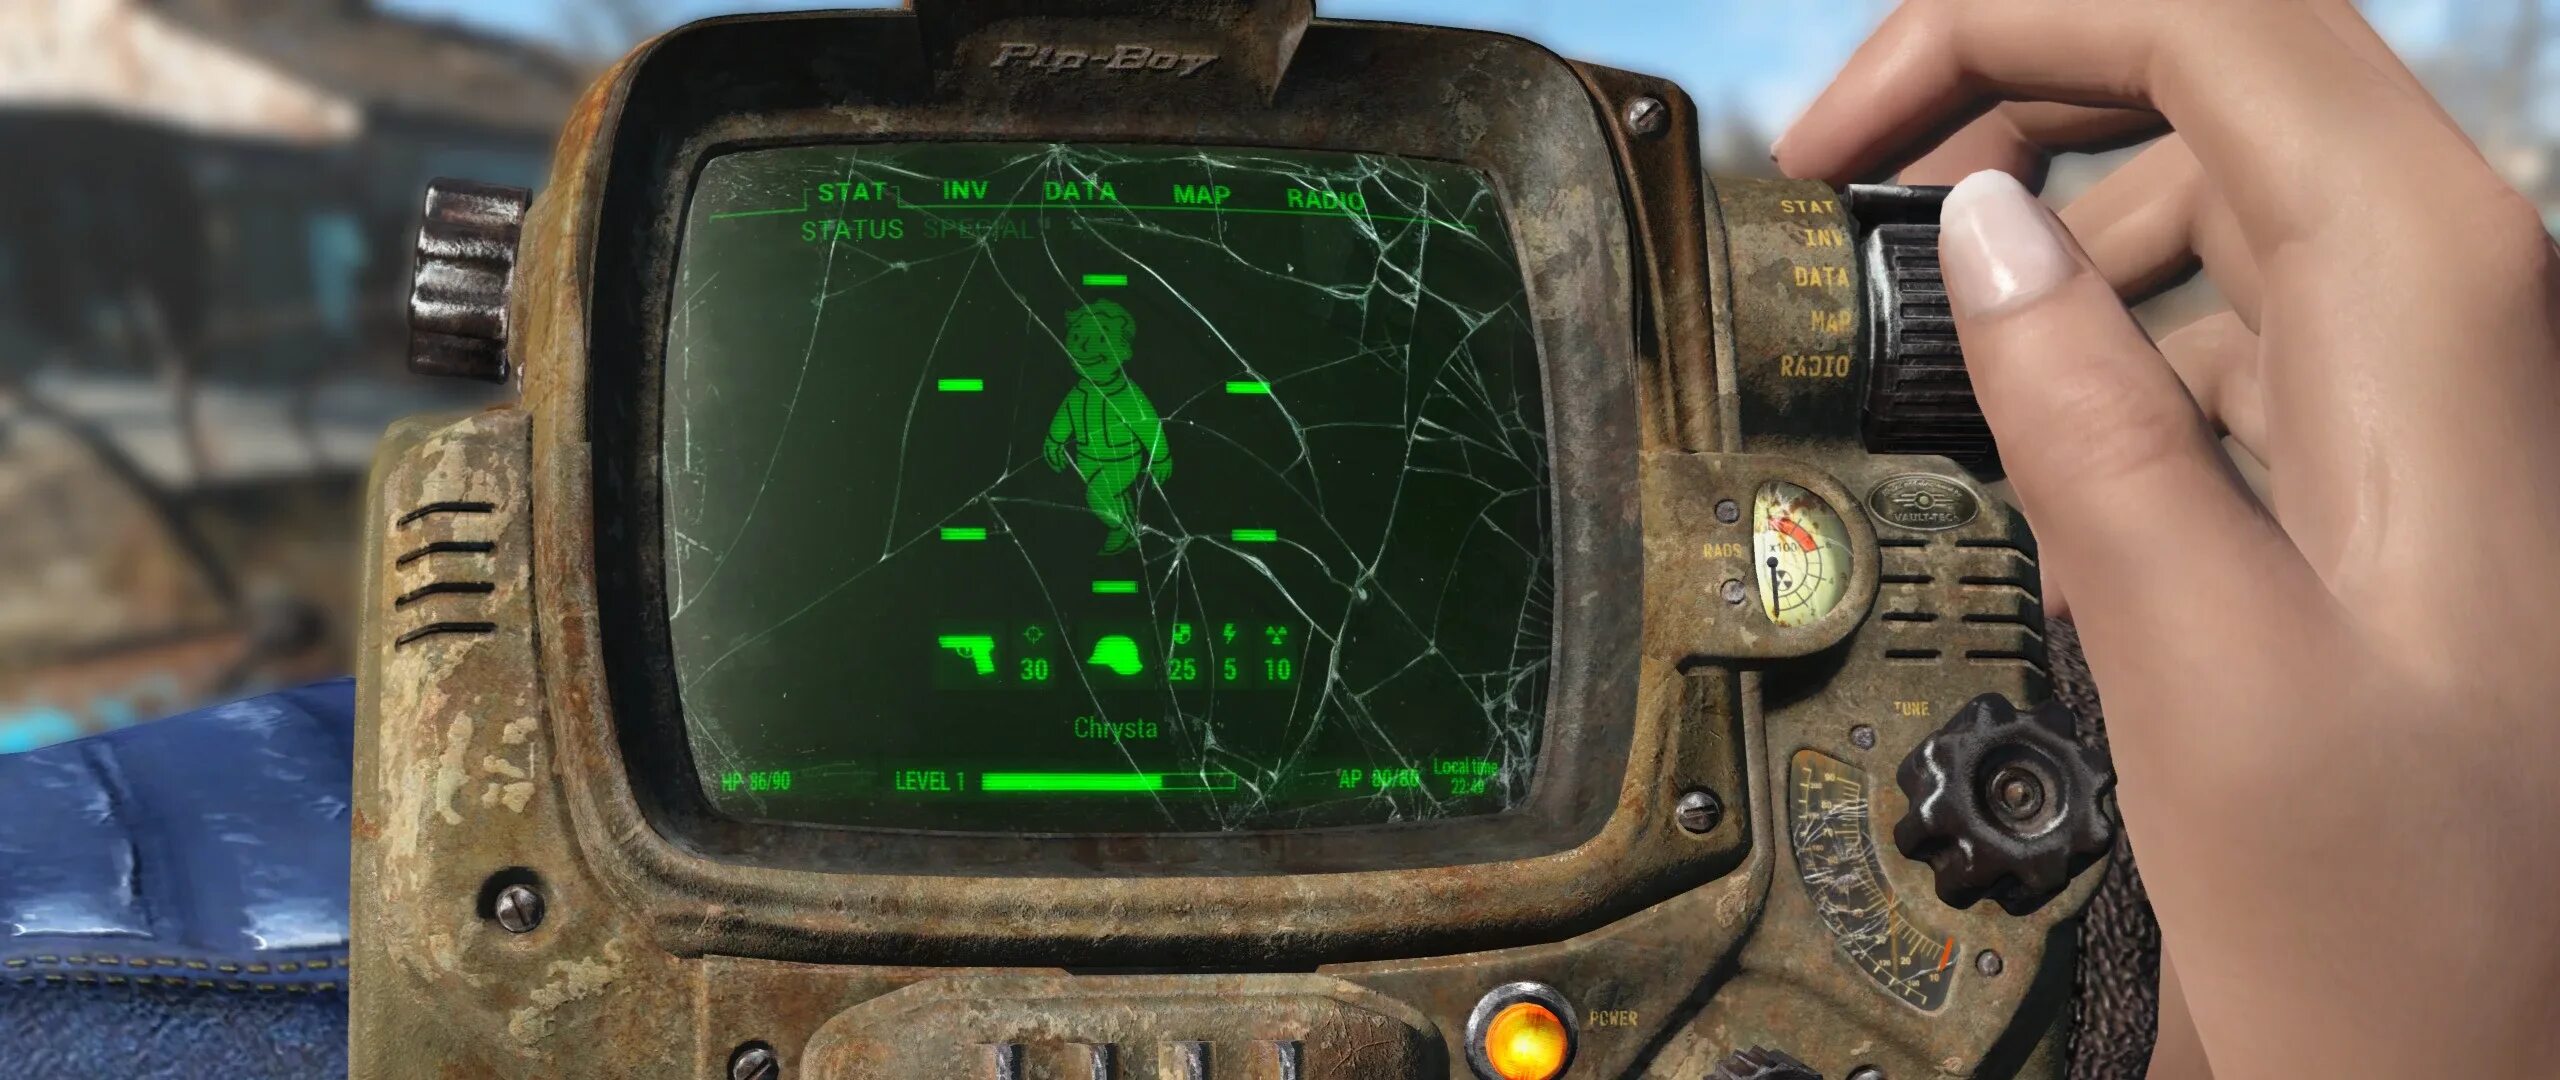 Fallout 4 монитор. Часы фоллаут 4. Фоллаут 4 пипбой. Пит бой фоллаут. Fallout 4 Pipboy Mod.